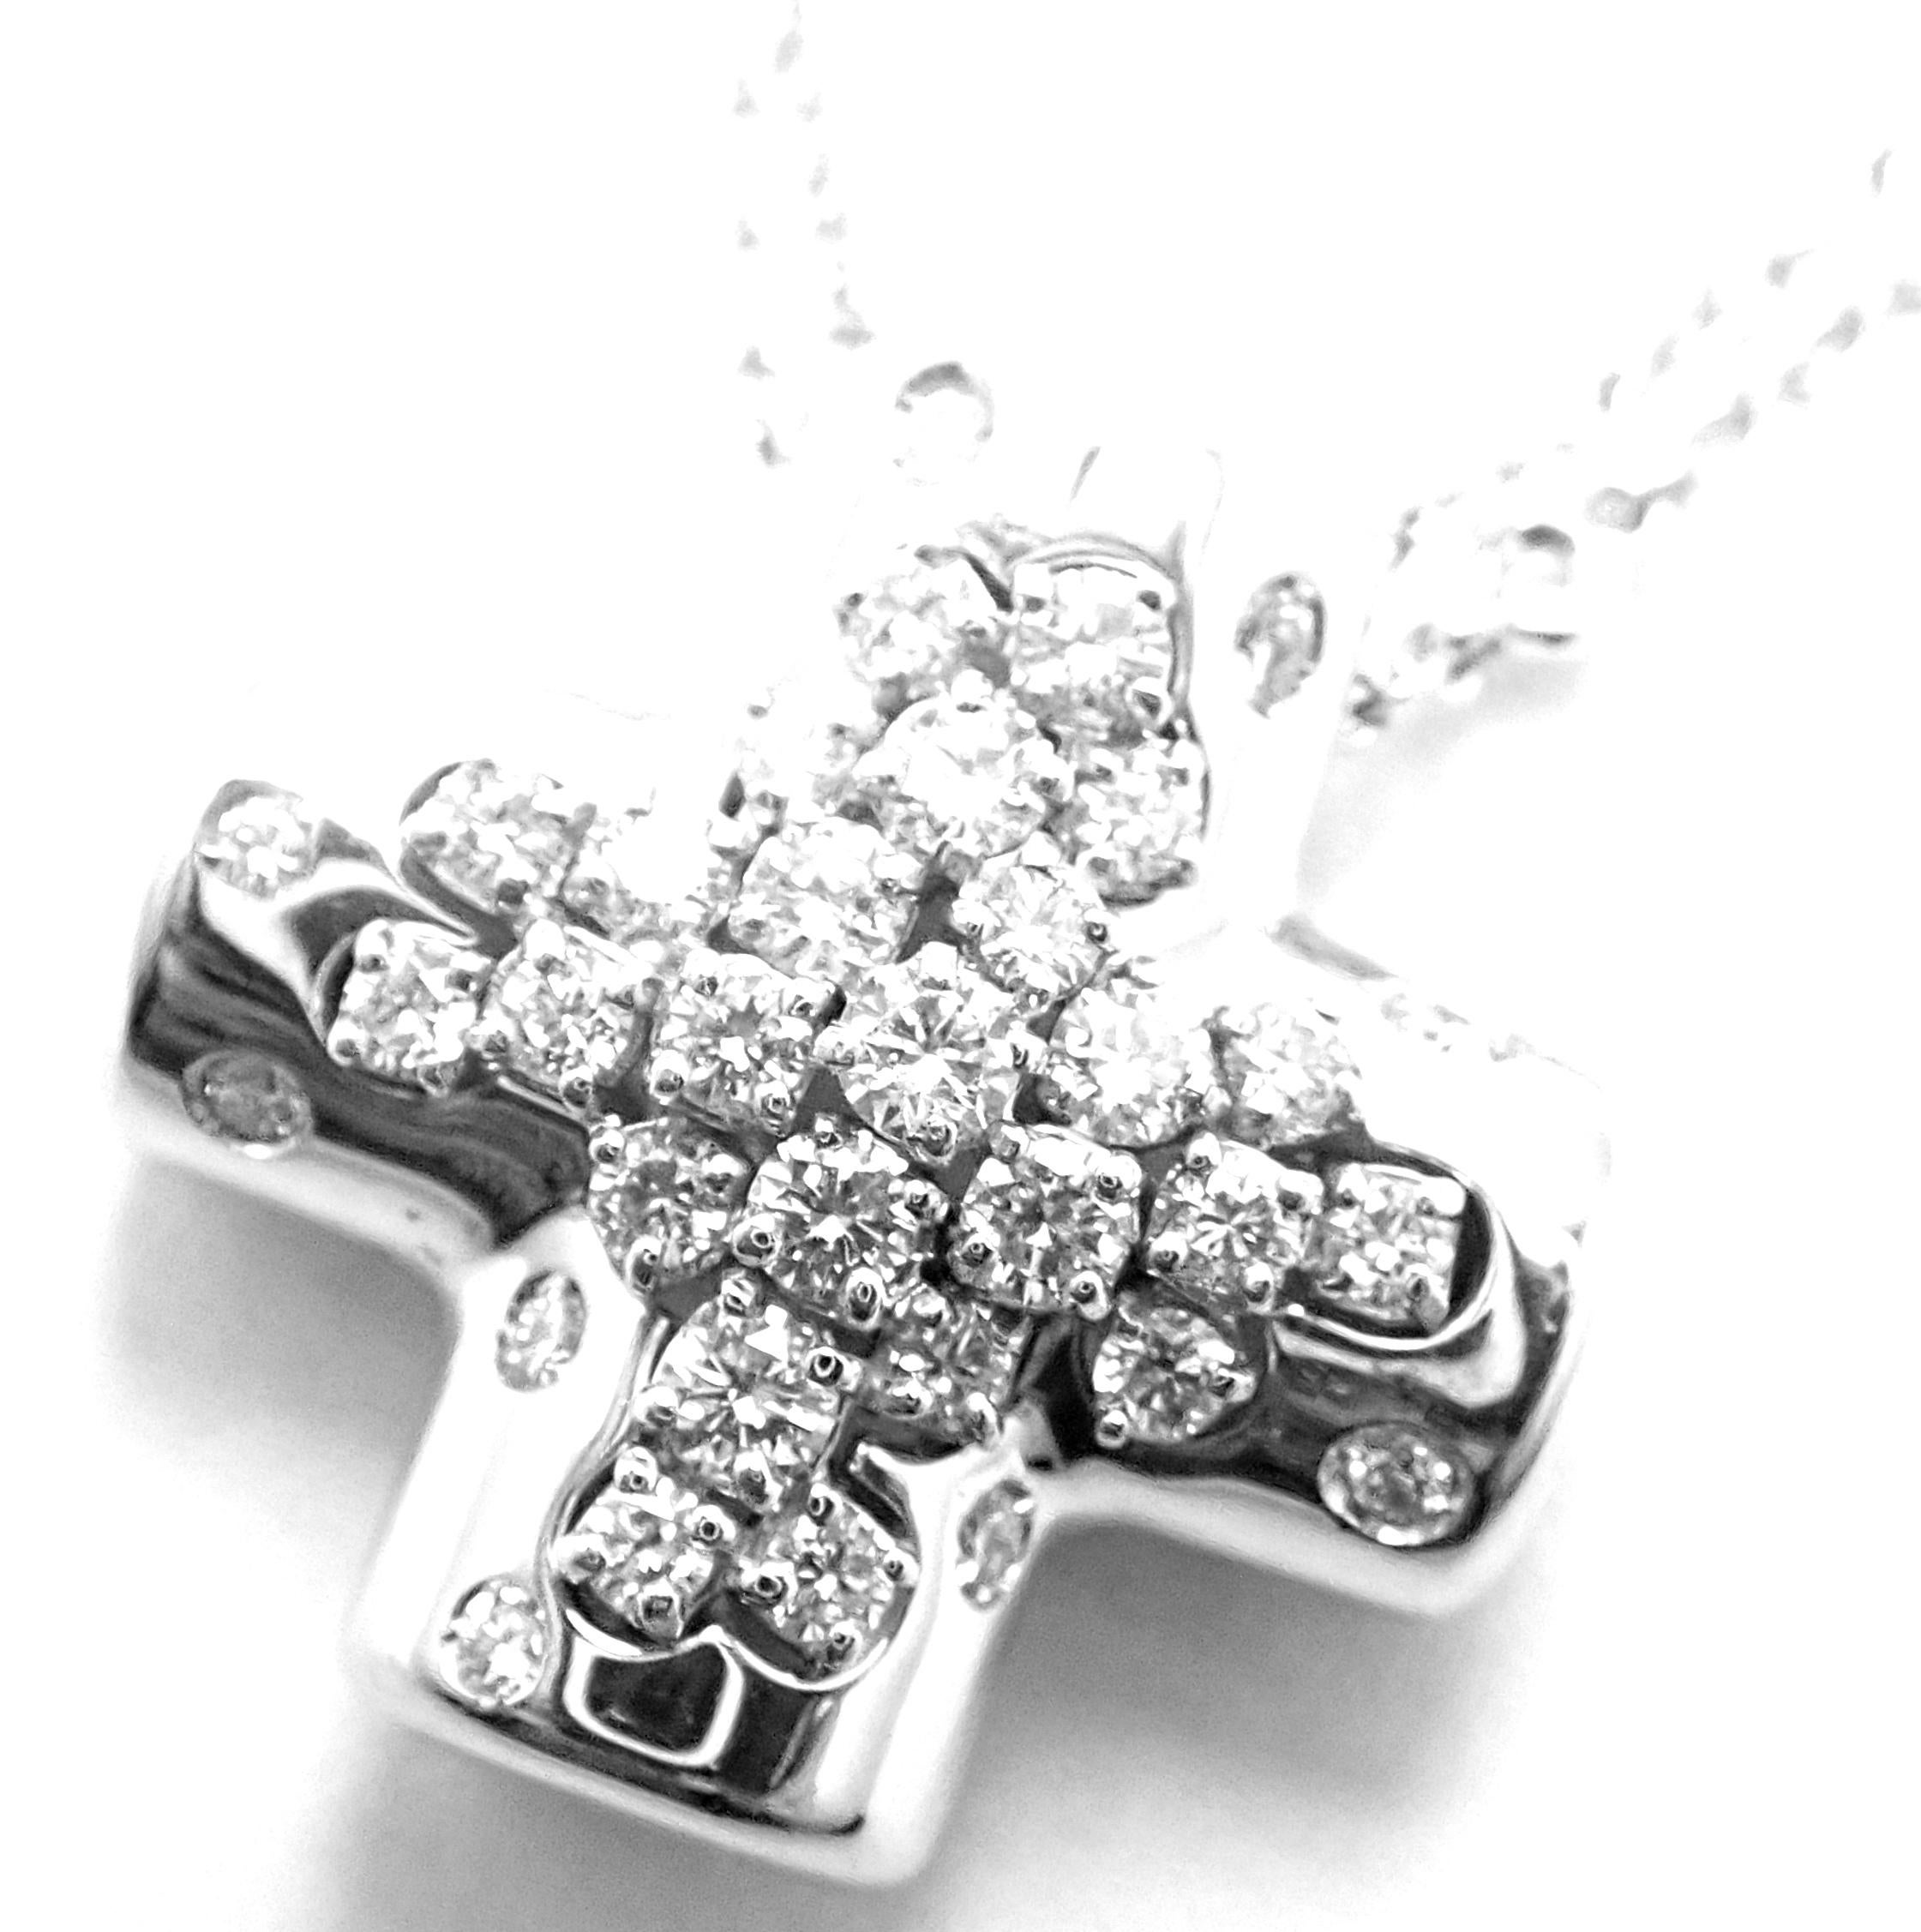 damiani cross necklace price